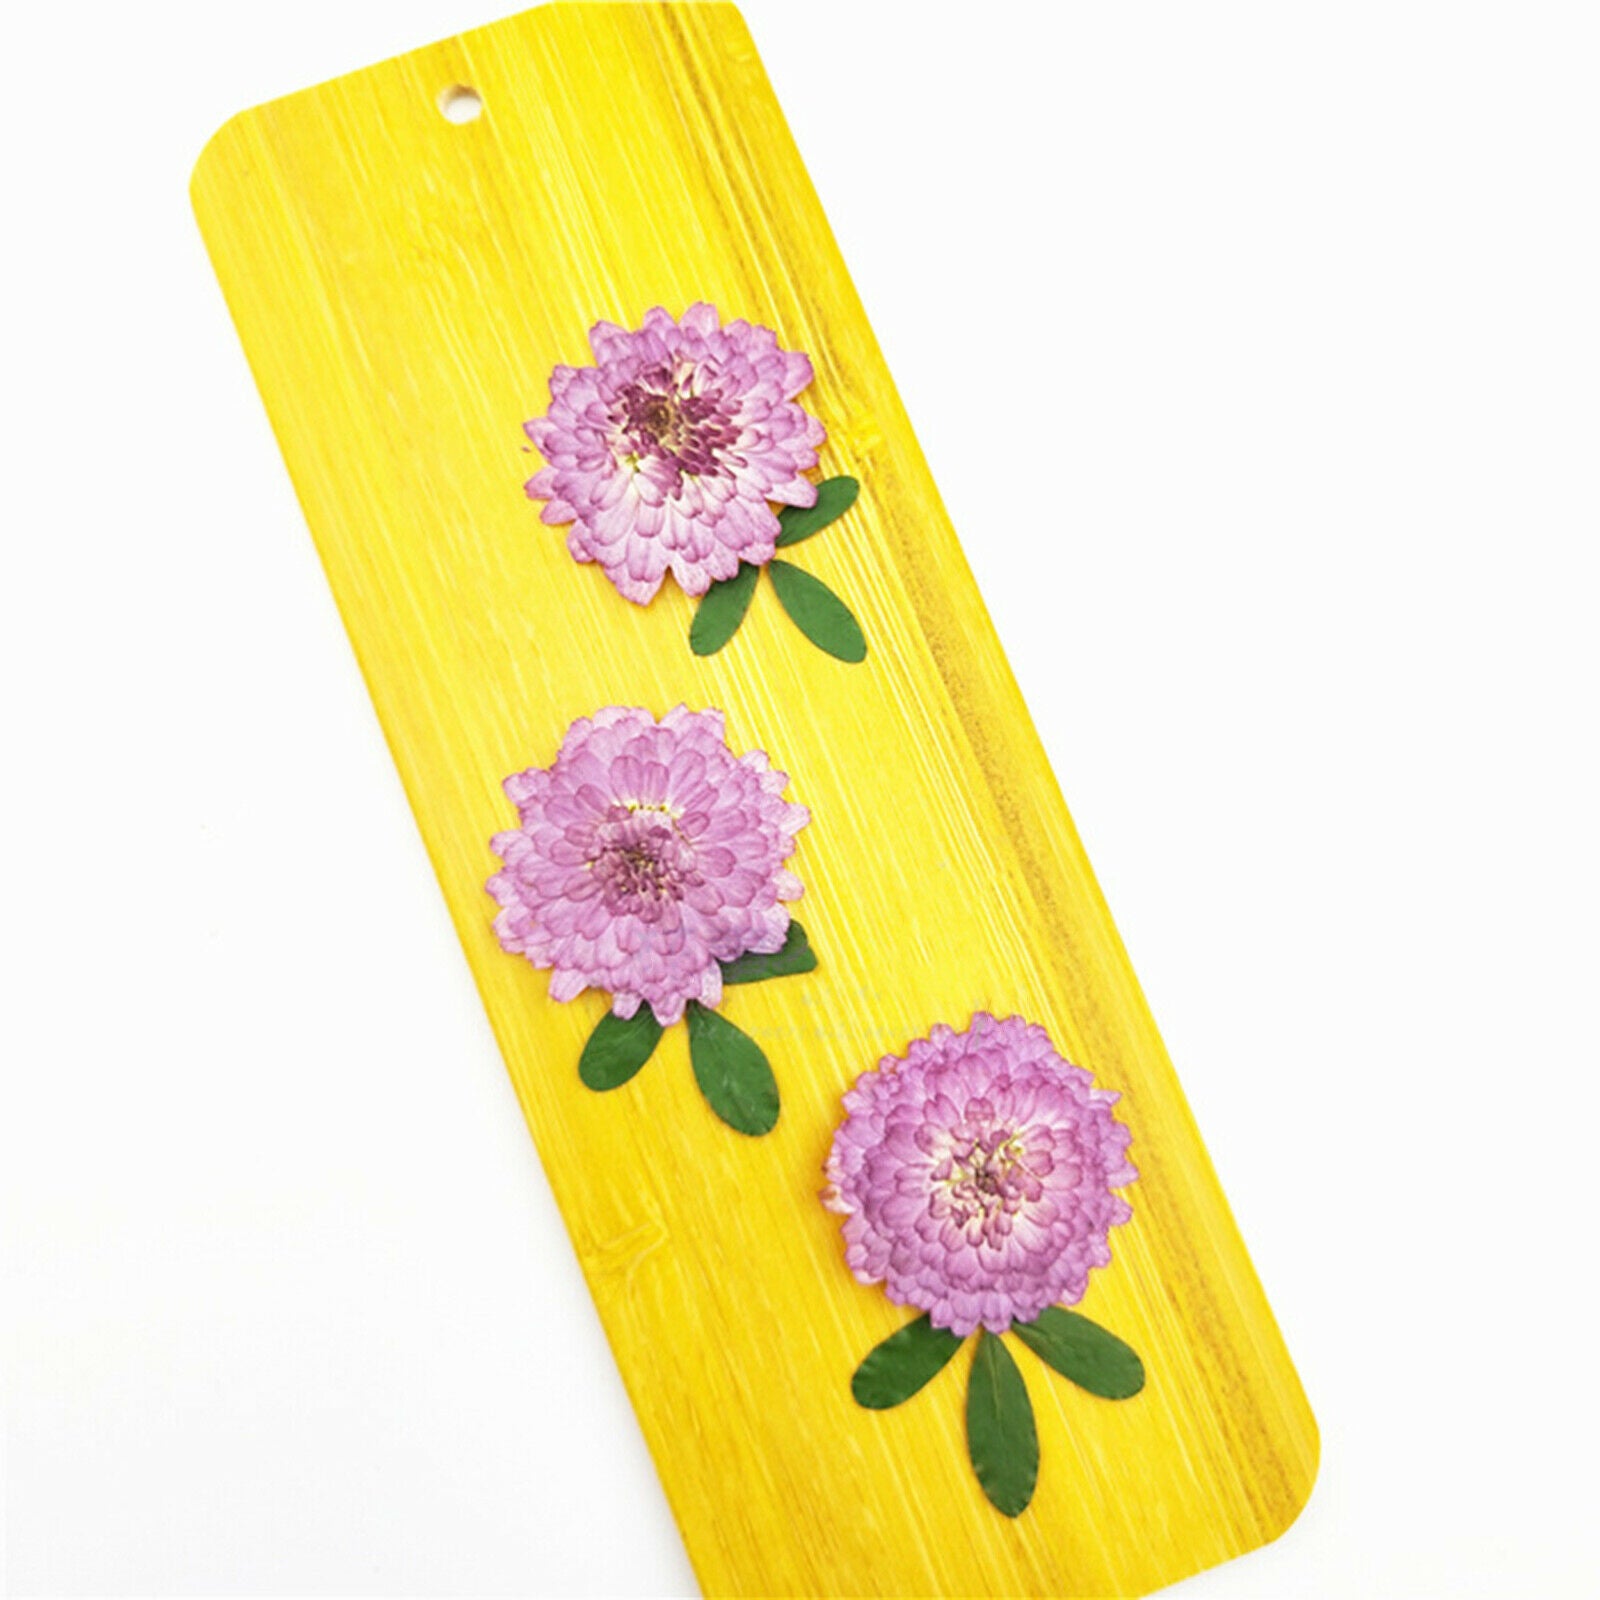 24pcs Pressed Dried Flower Leaves DIY Bookmark Nail Arts Embellishments